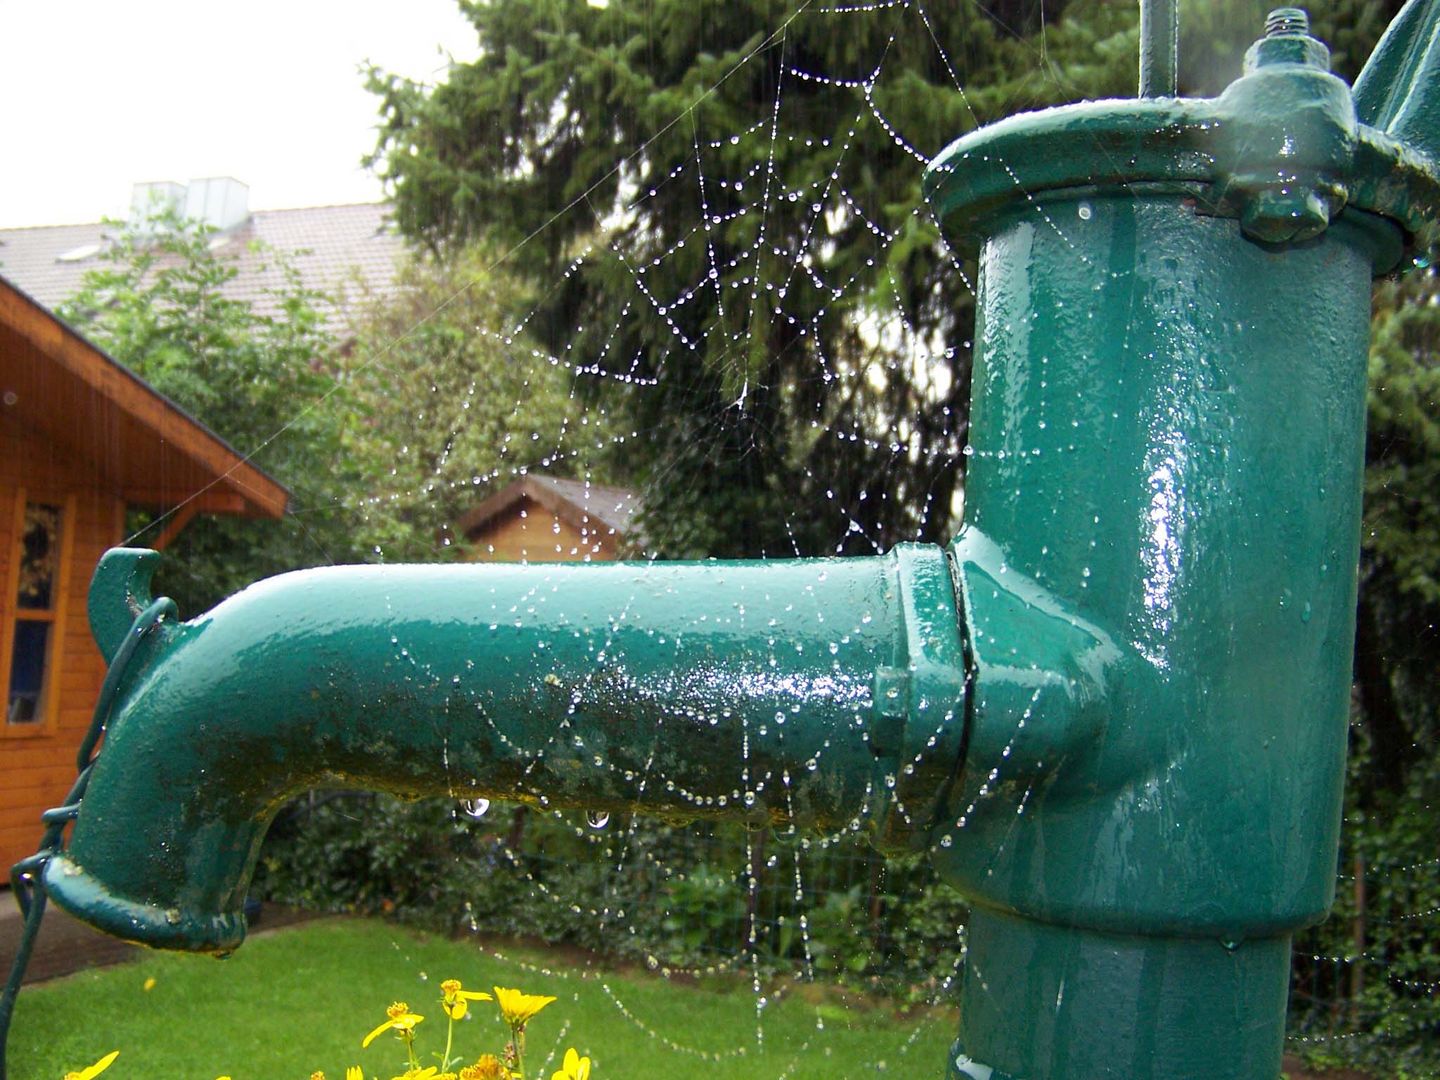 Sogar bei dem Starkregen kann sich das Spinnnetz an der Pumpe halten